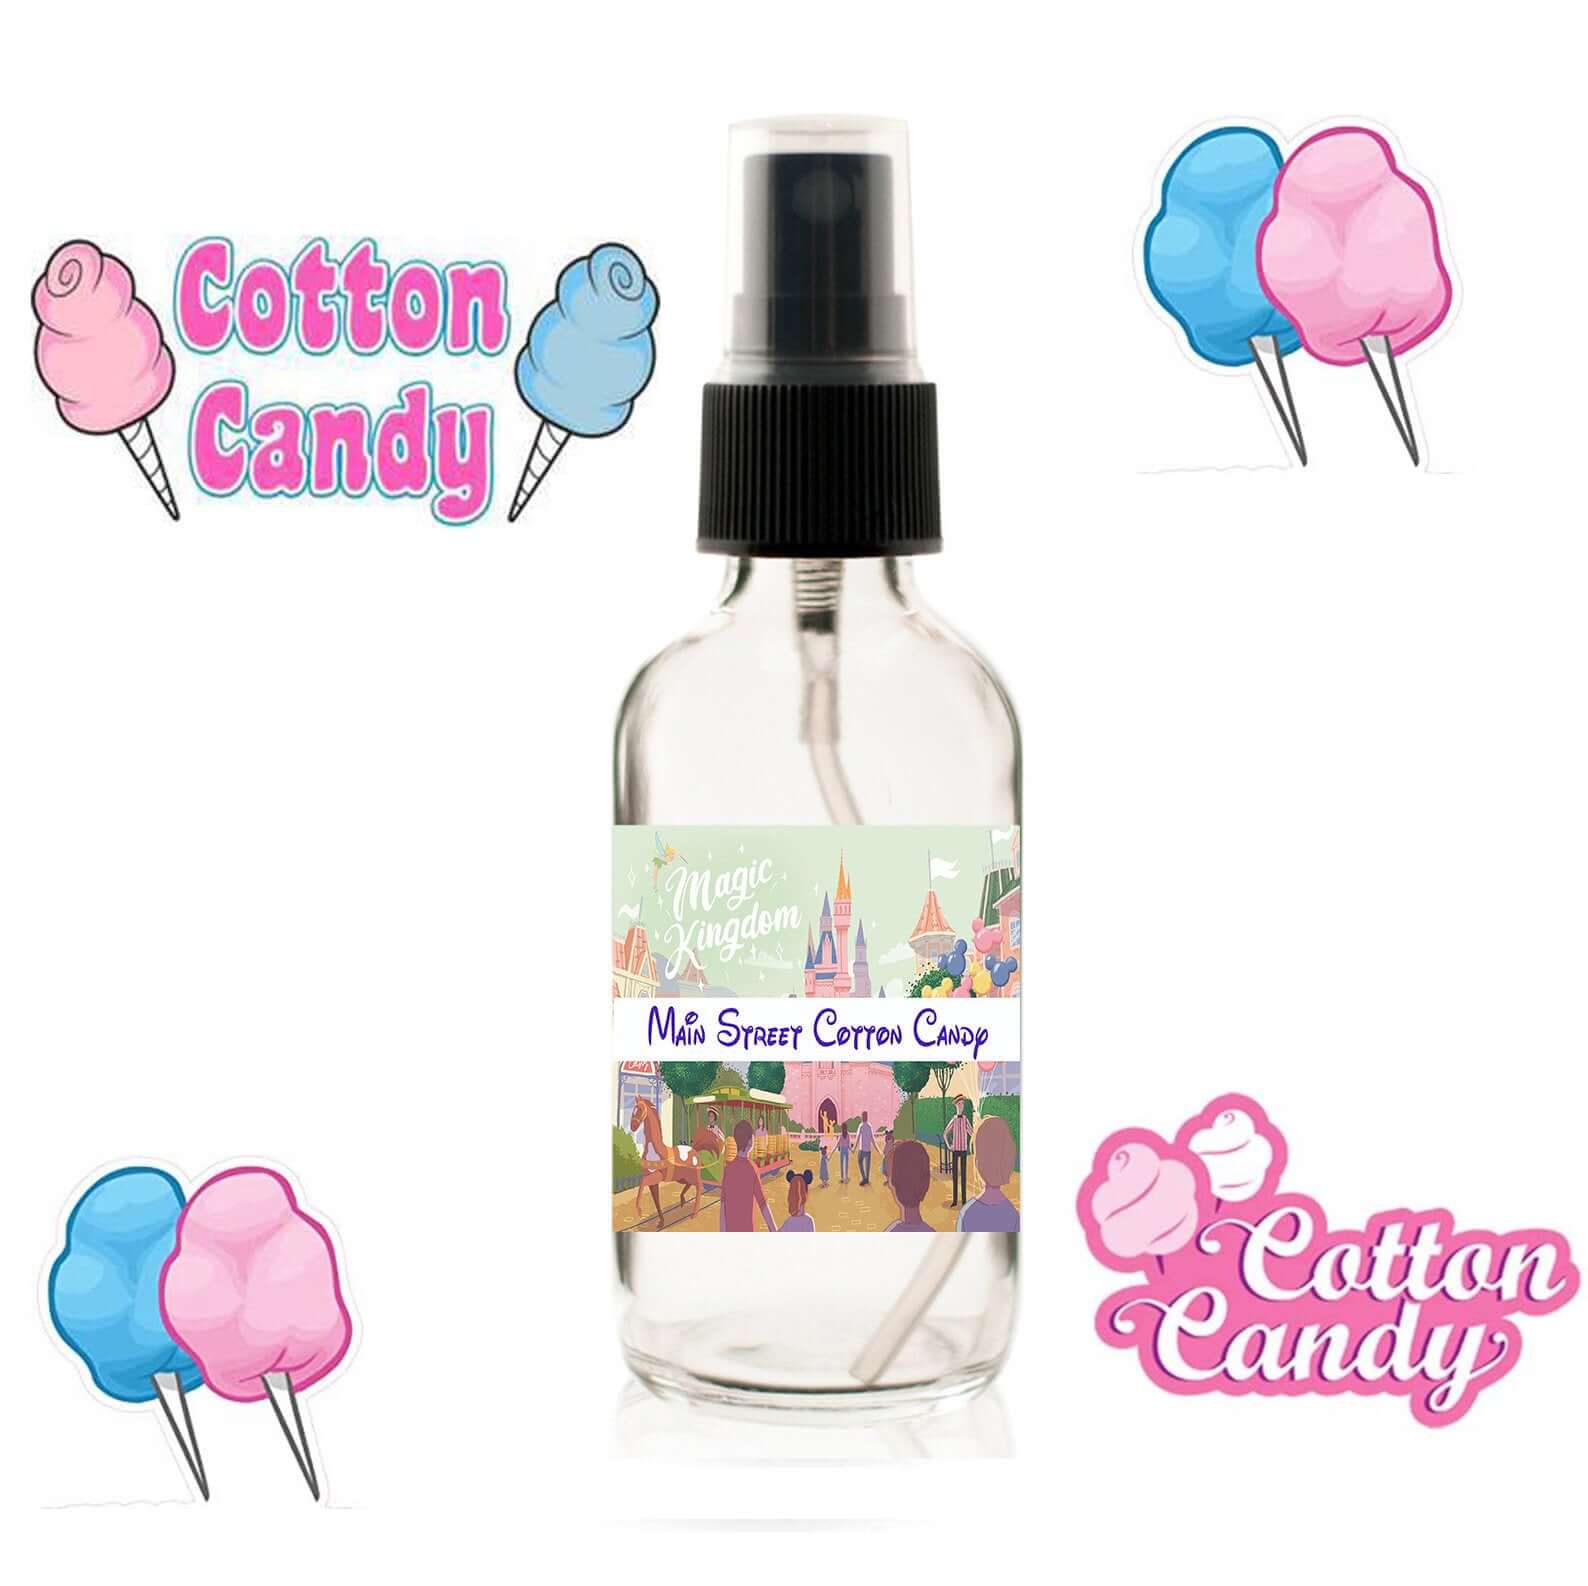 Main Street Cotton Candy Fragrance 2oz...